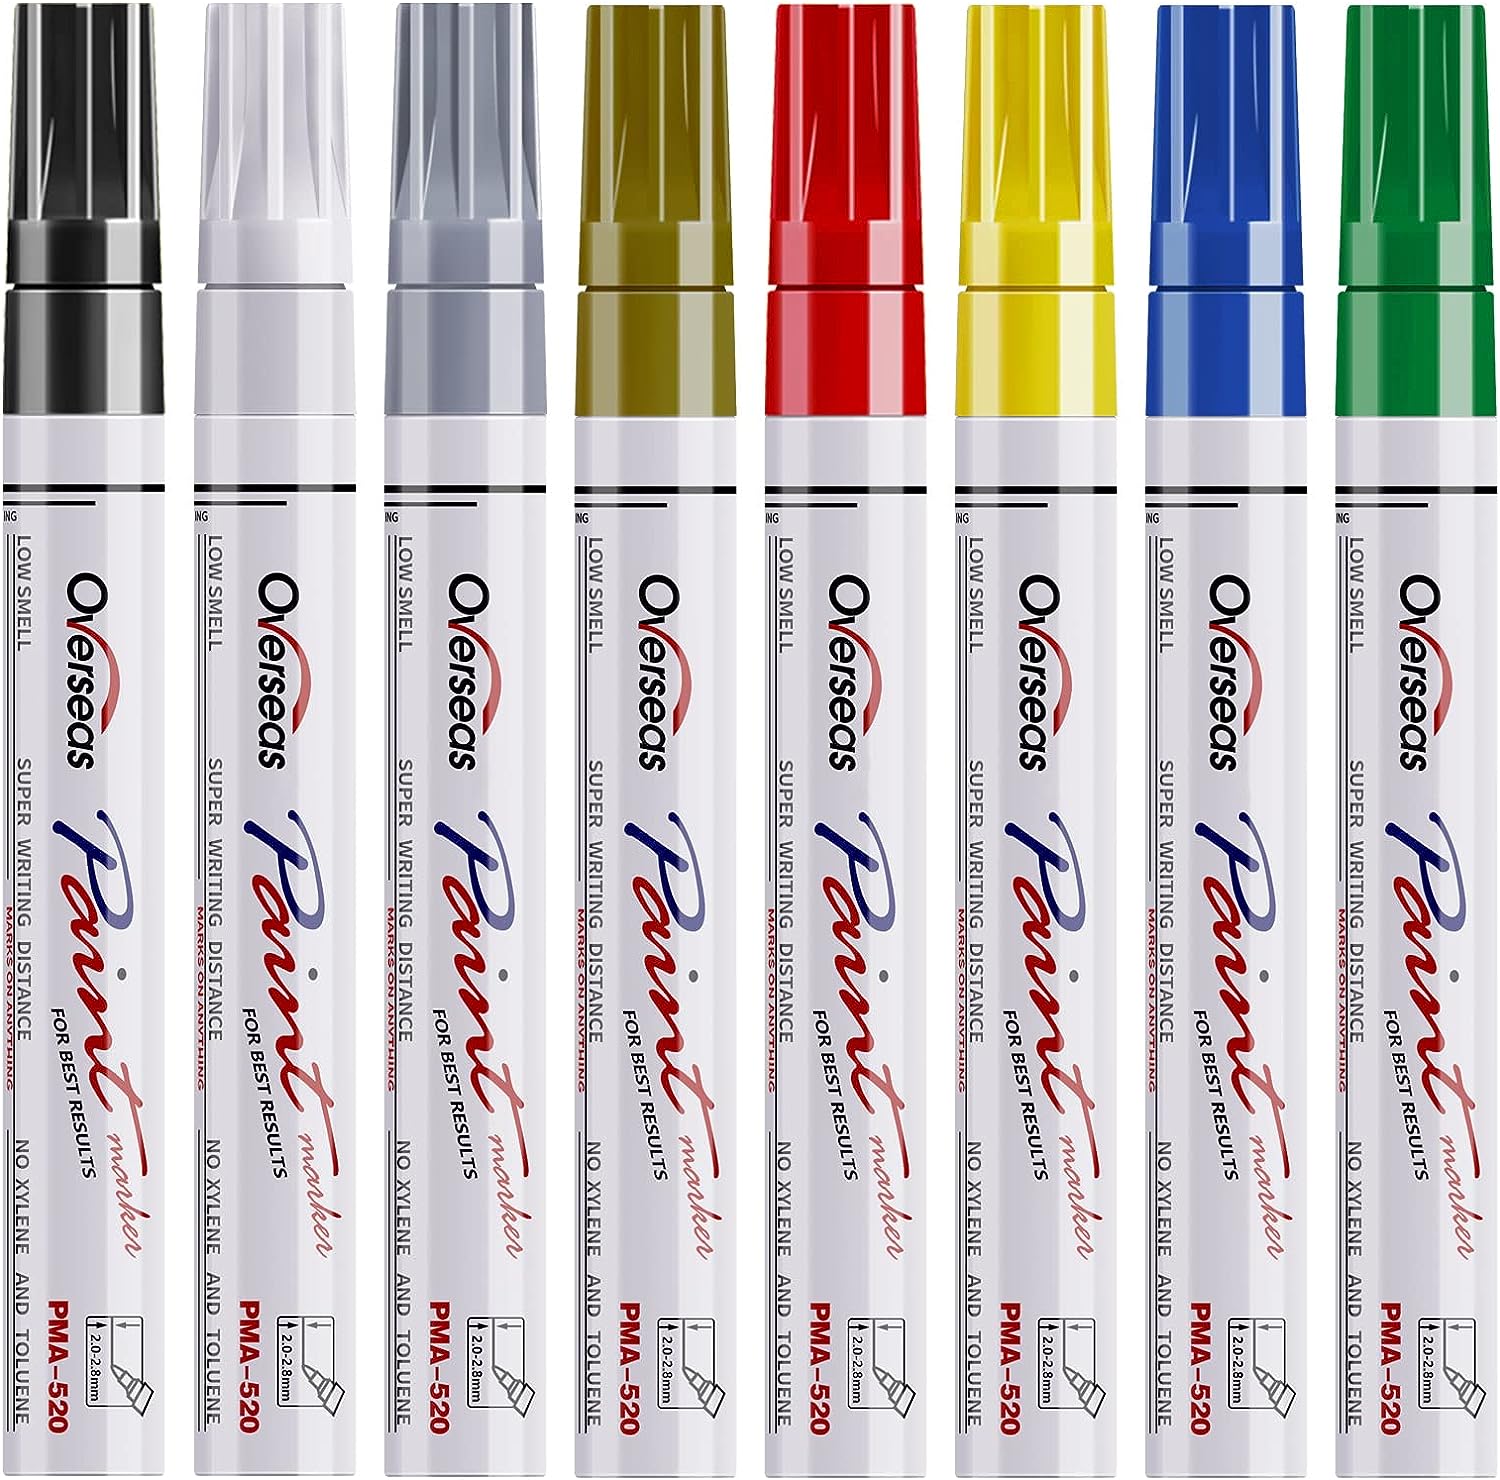 Paint Marker Pens - 8 Colors Oil Based Paint Markers, [...]